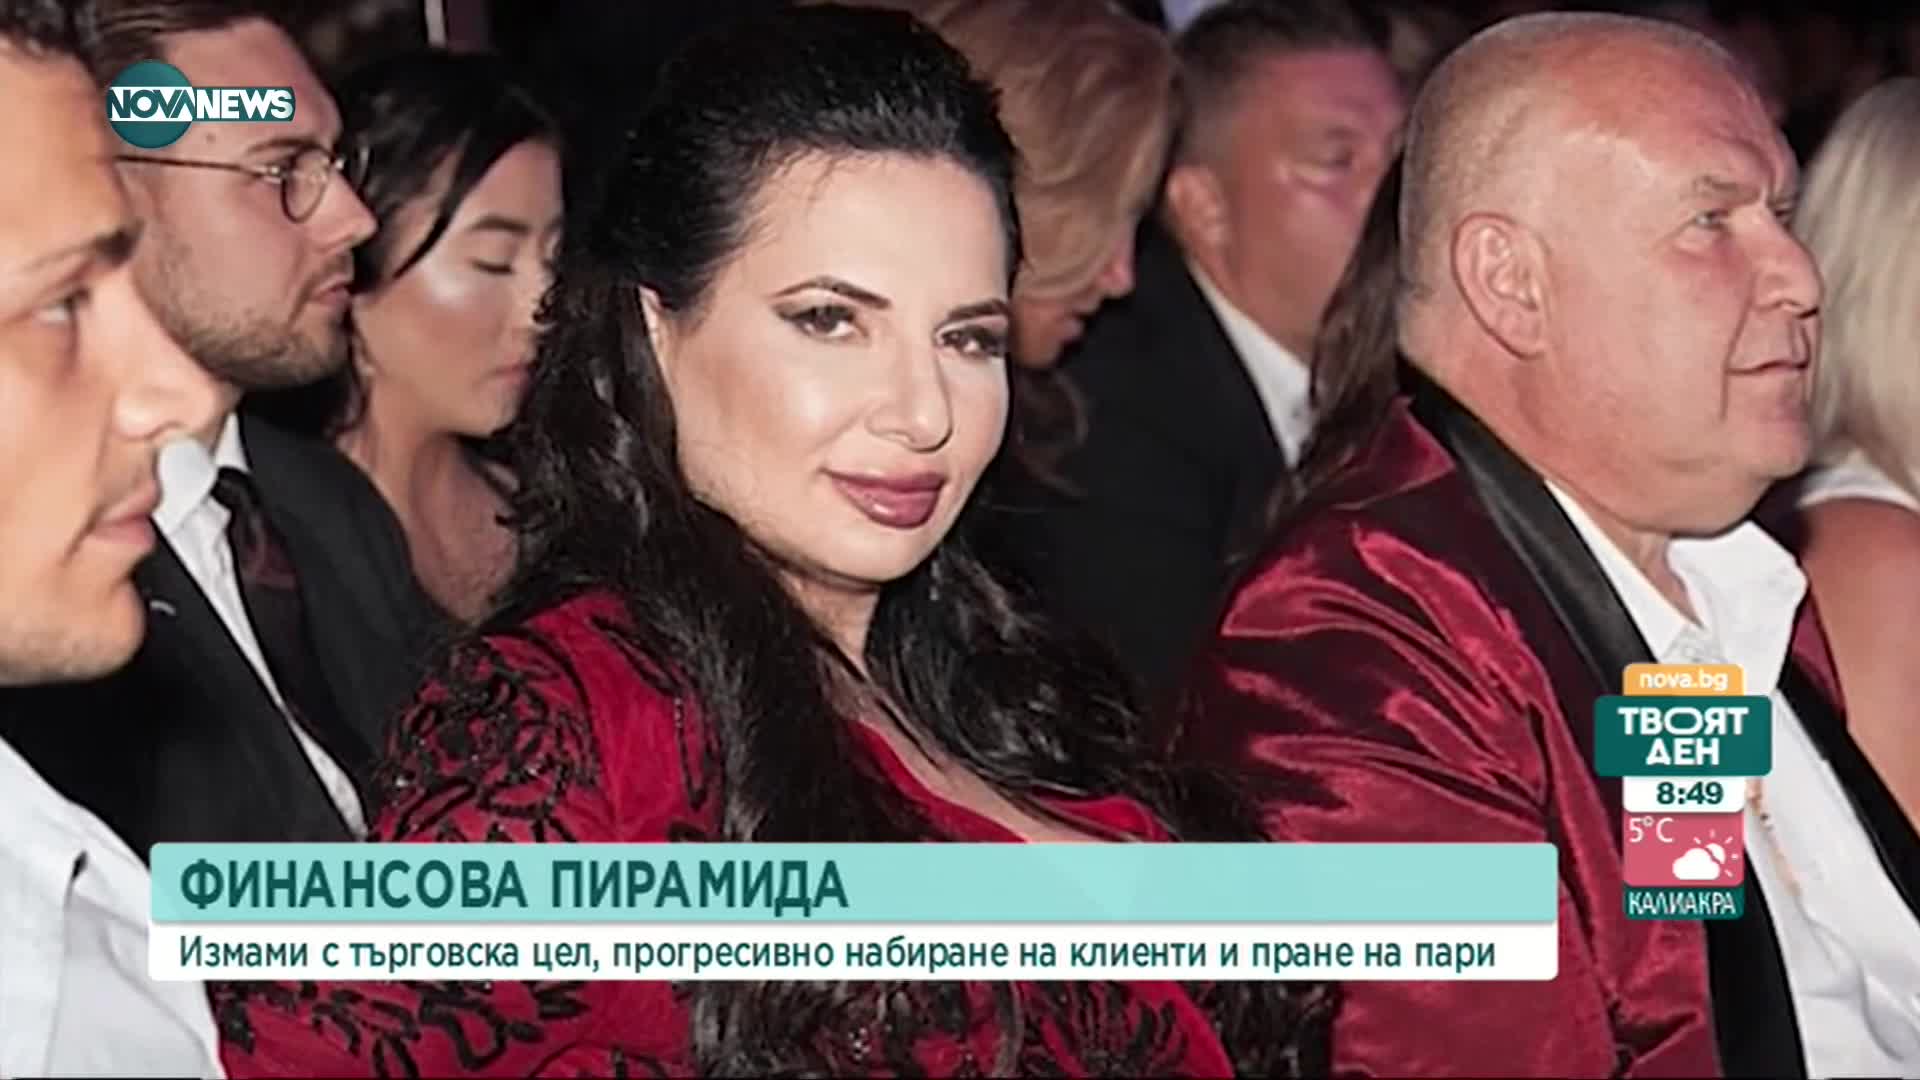 Кралицата на измамите: На какво се дължи успехът на фалшивата схема на Ружа Игнатова